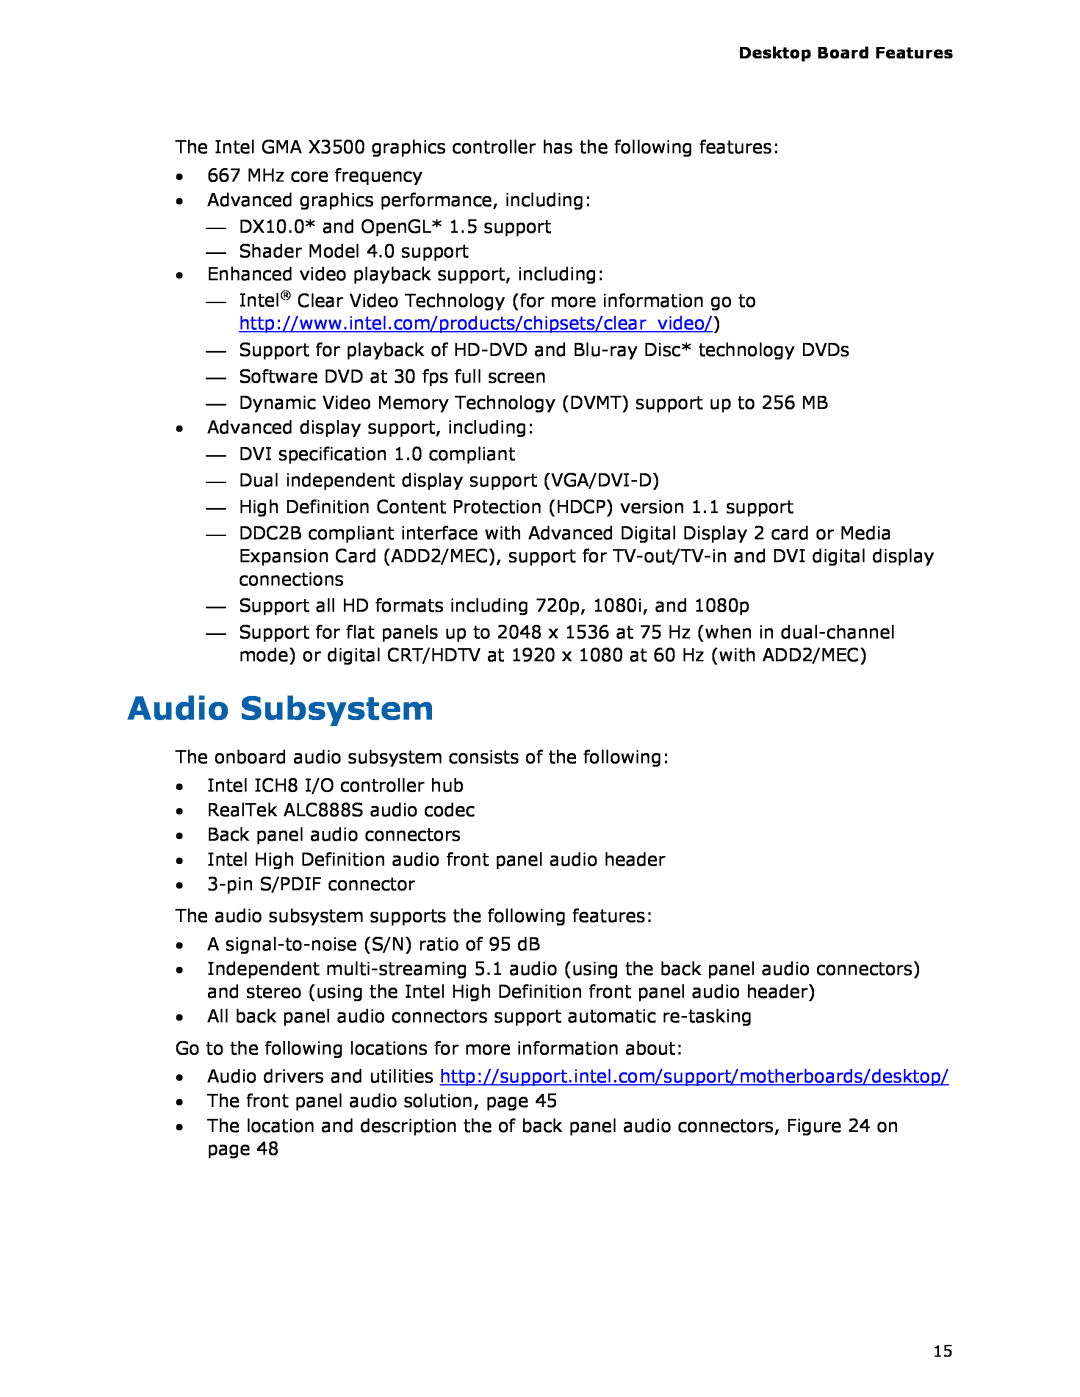 Intel DG35EC, Intel Desktop Board manual Audio Subsystem 